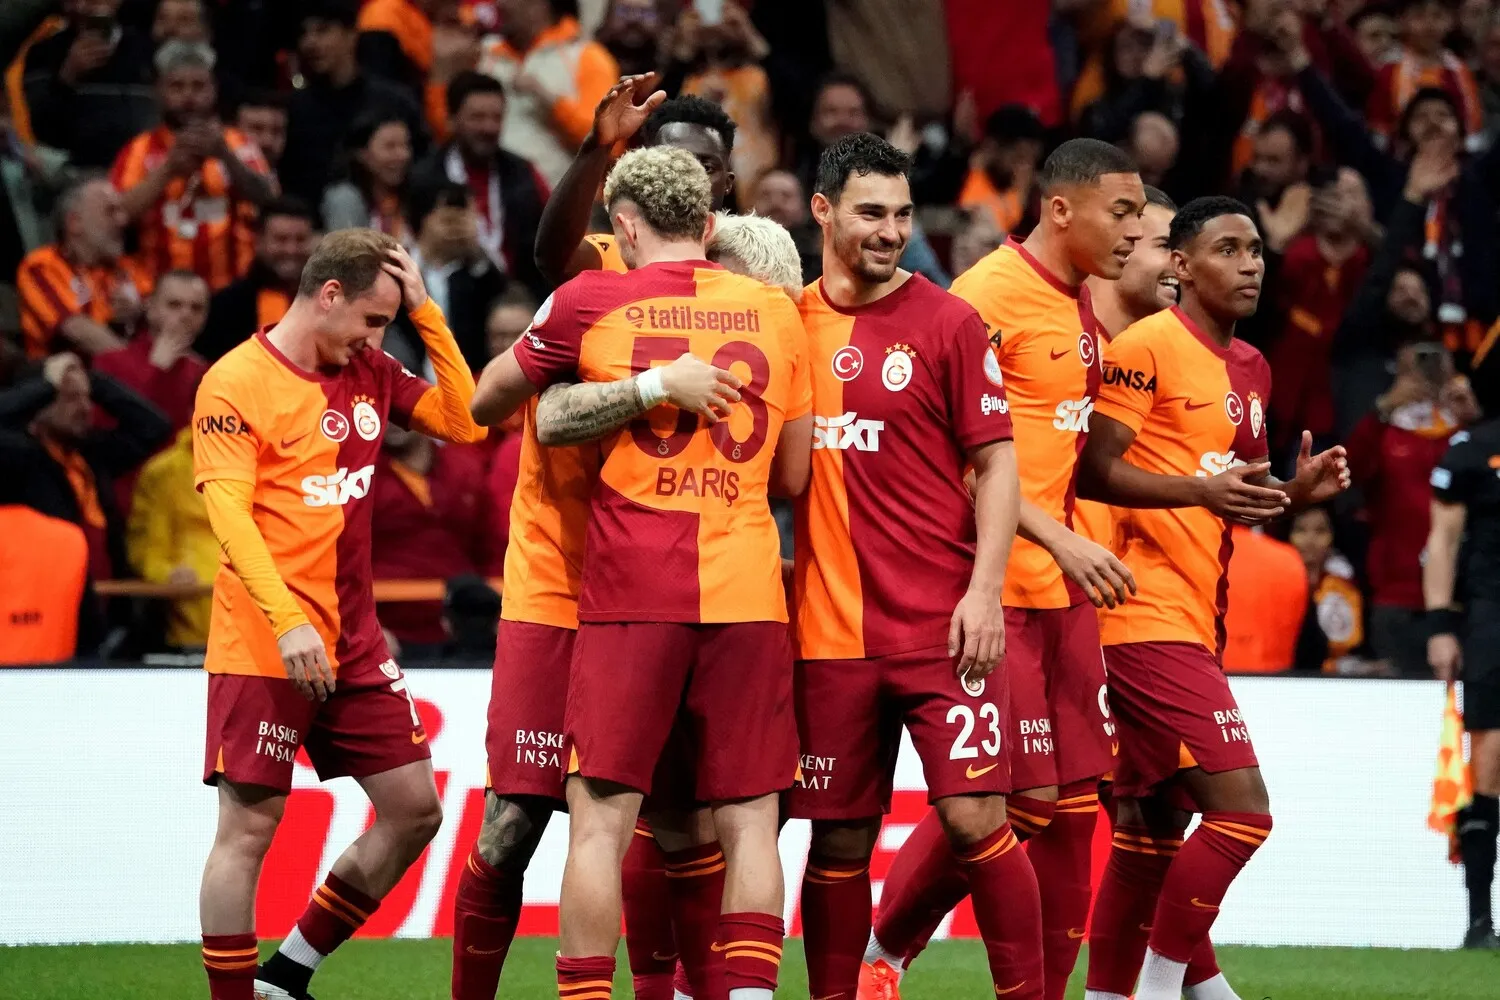 Gencgazete Spor Galatasaray Secim (10)